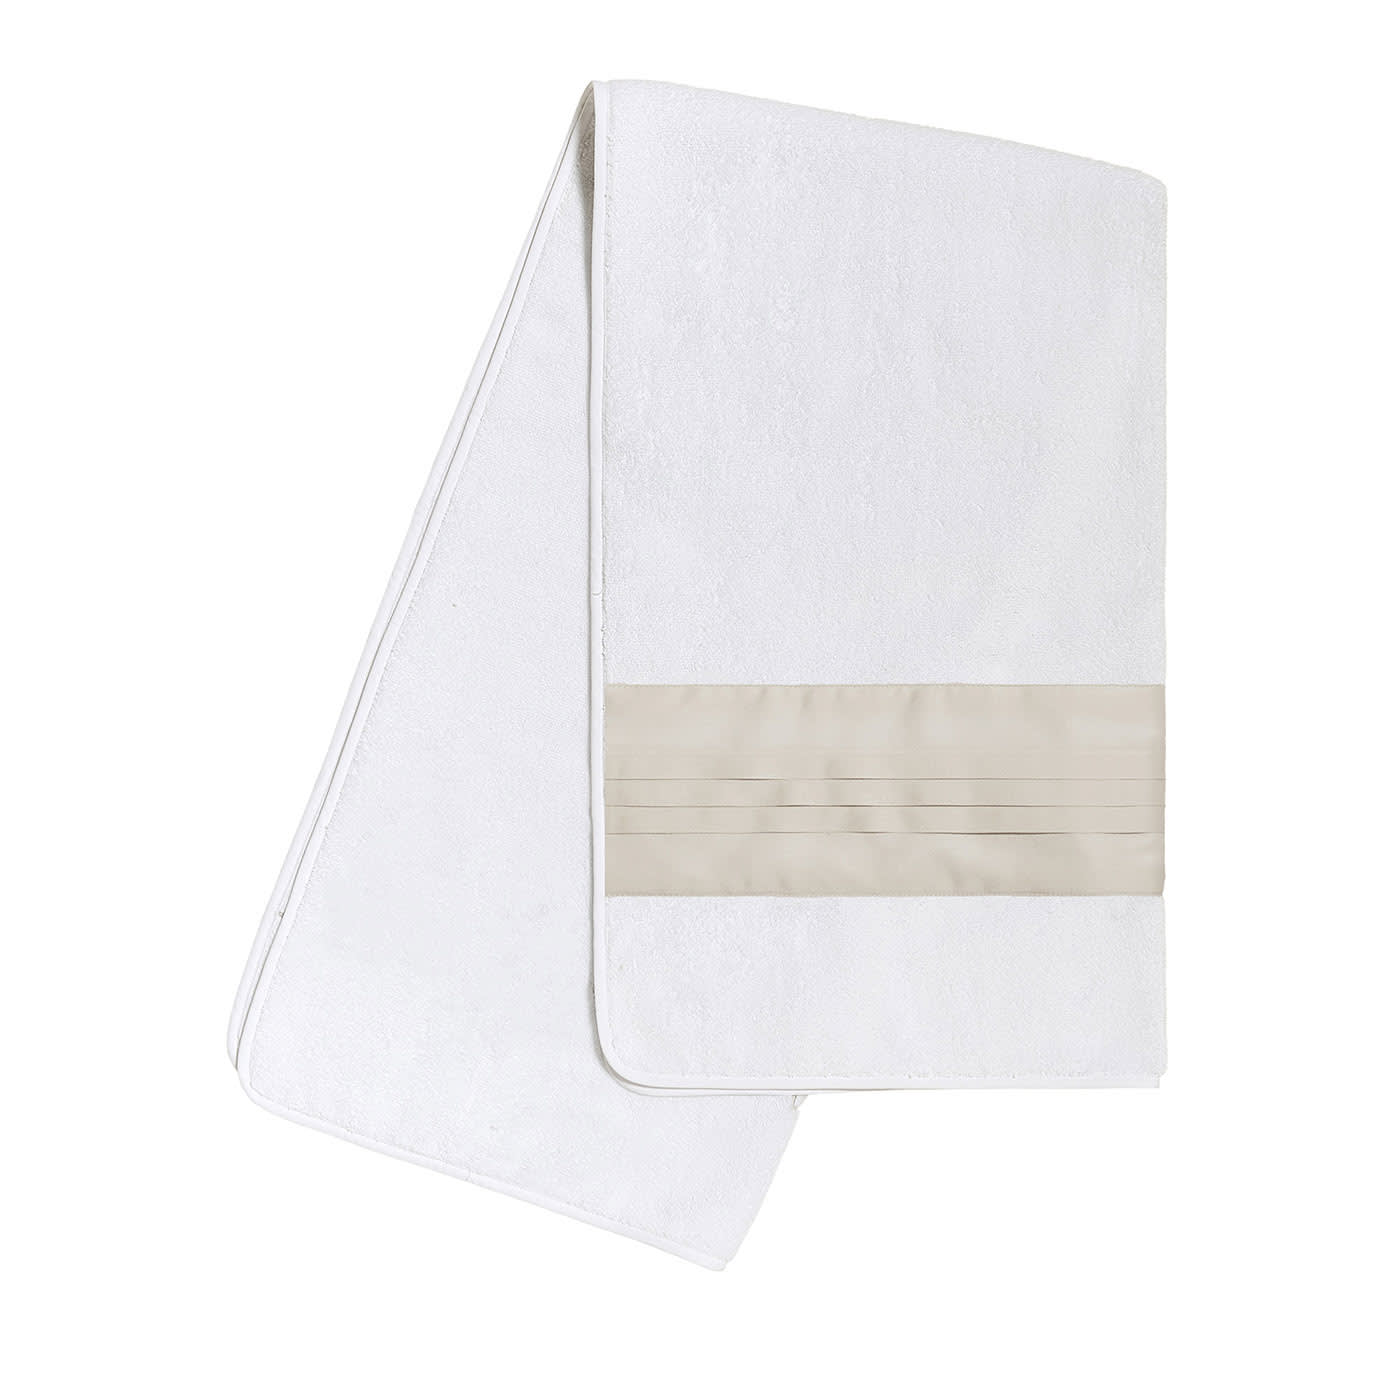 Plissè White & Marble Bath Towel - Verderoccia